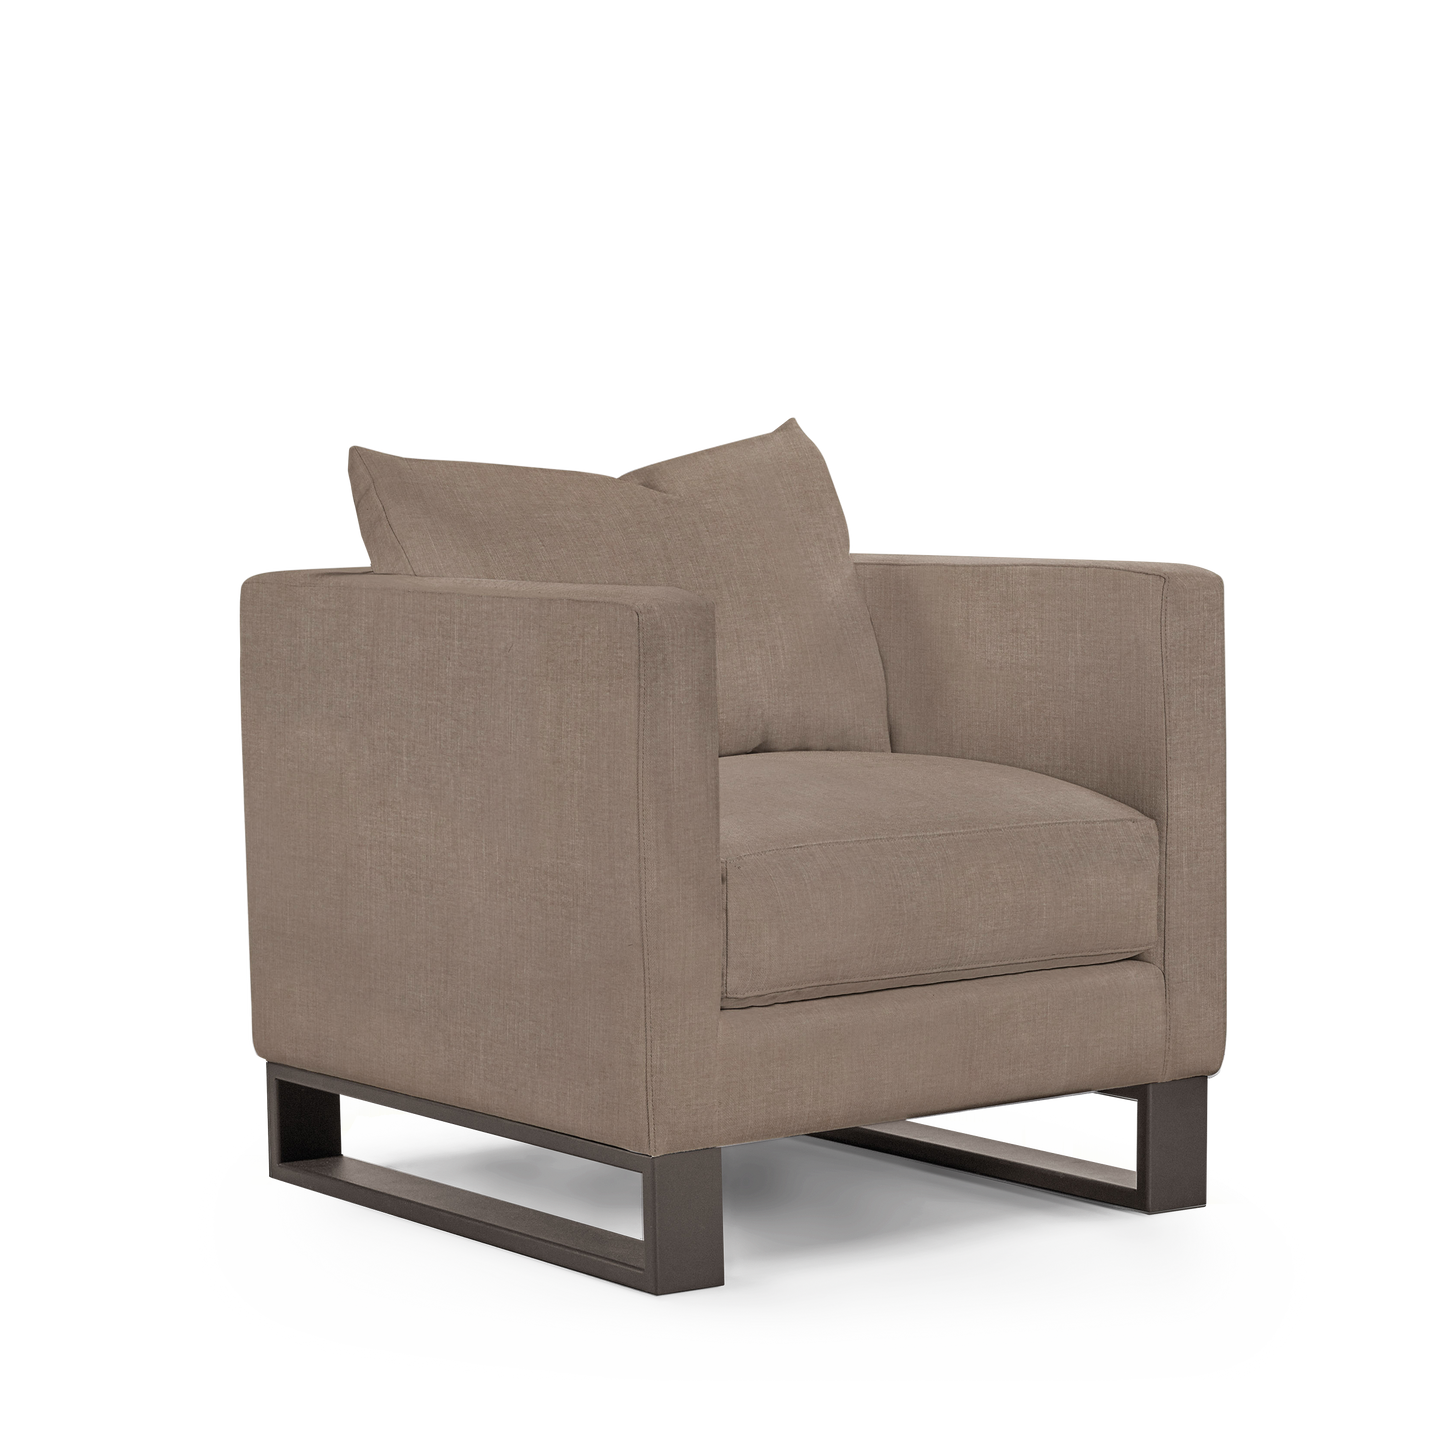 Atlin armchair with linara light brown textile with moka legs 